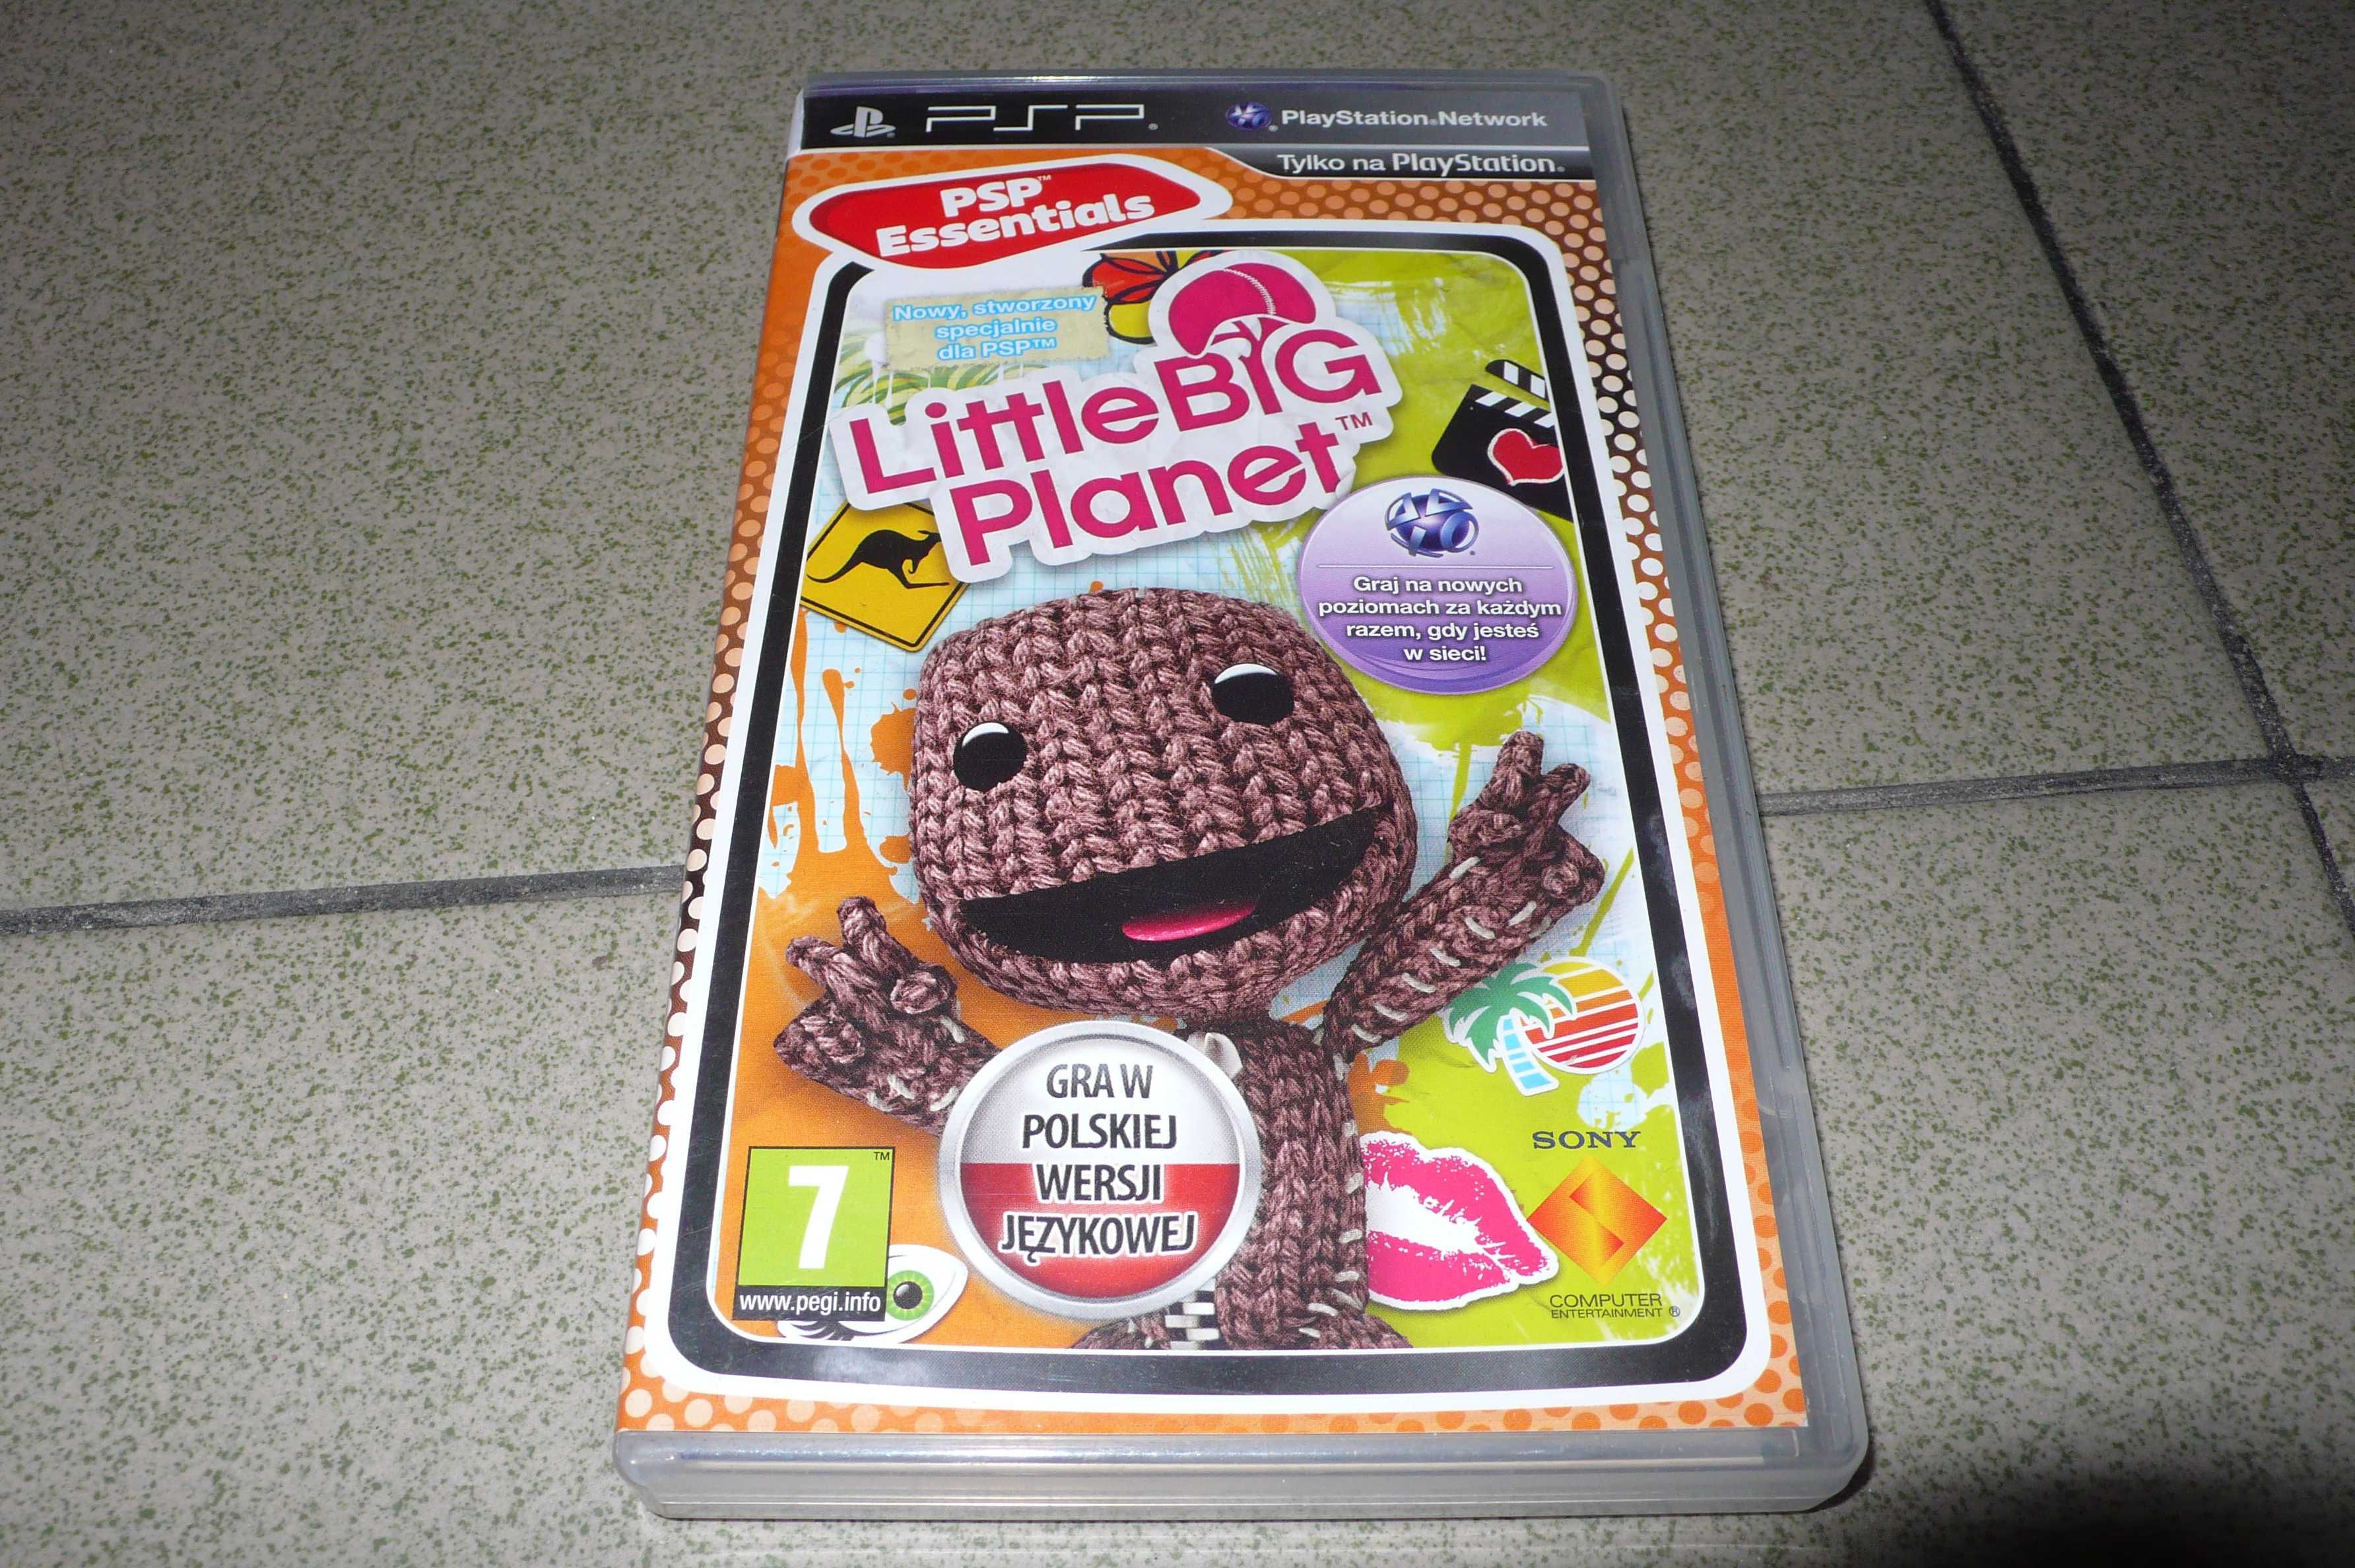 LittleBigPlanet PL na PSP polska wersja